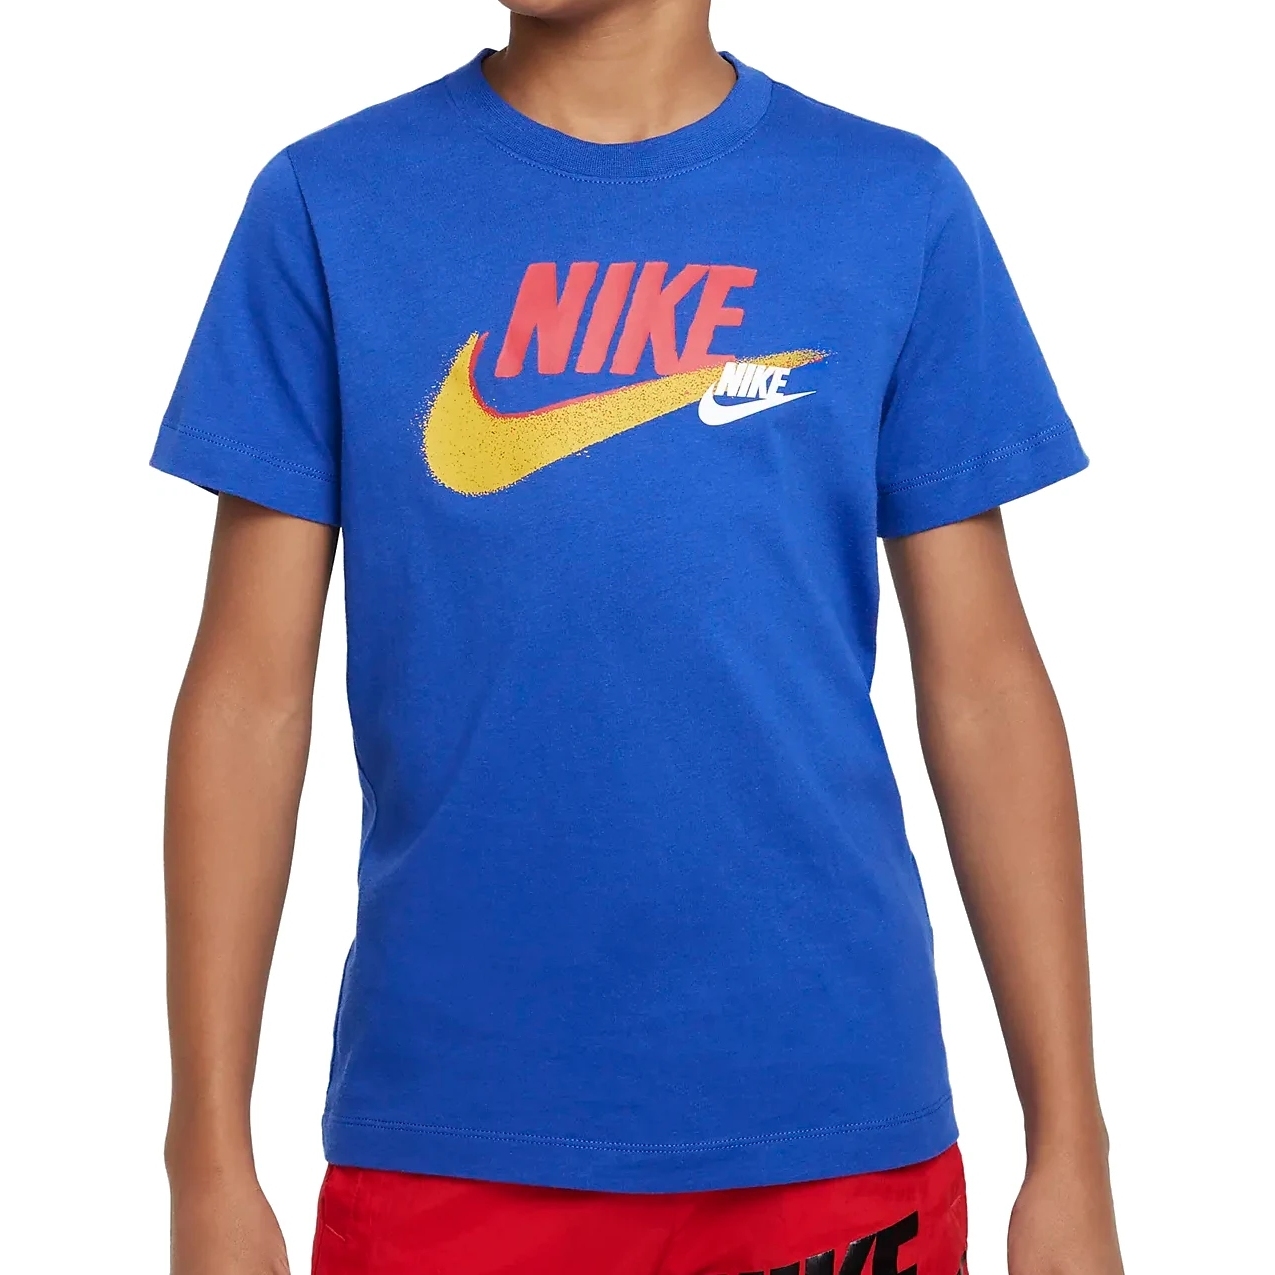 Nike Sportswear T-Shirt - BIKE24 Kinder FD1201-480 royal | game